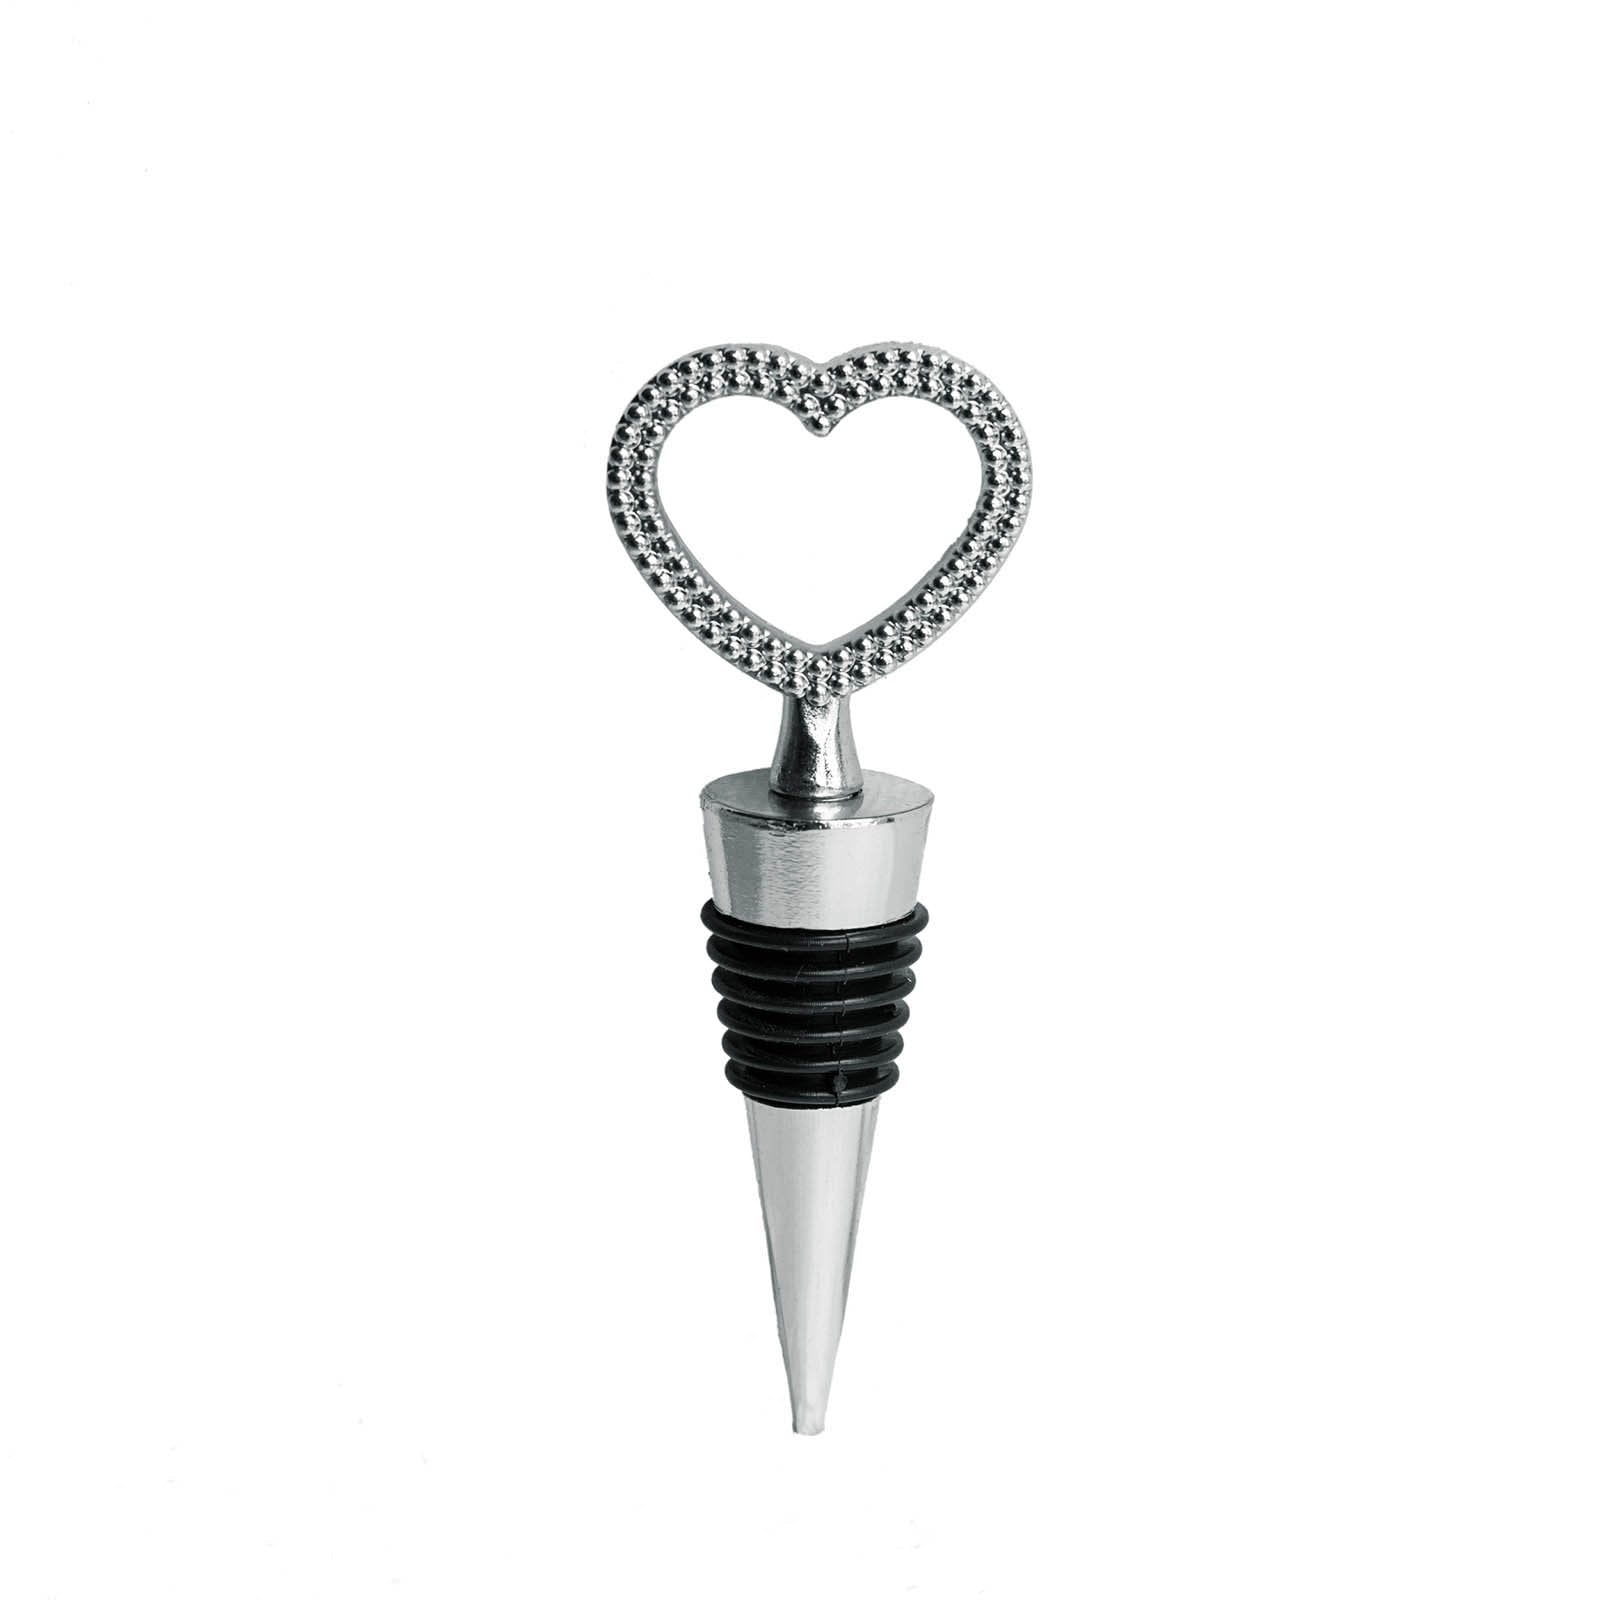 Silver Metal Heart-Shaped Wine Bottle Stopper Wedding Favor with Velvet Gift Box - 1 Piece